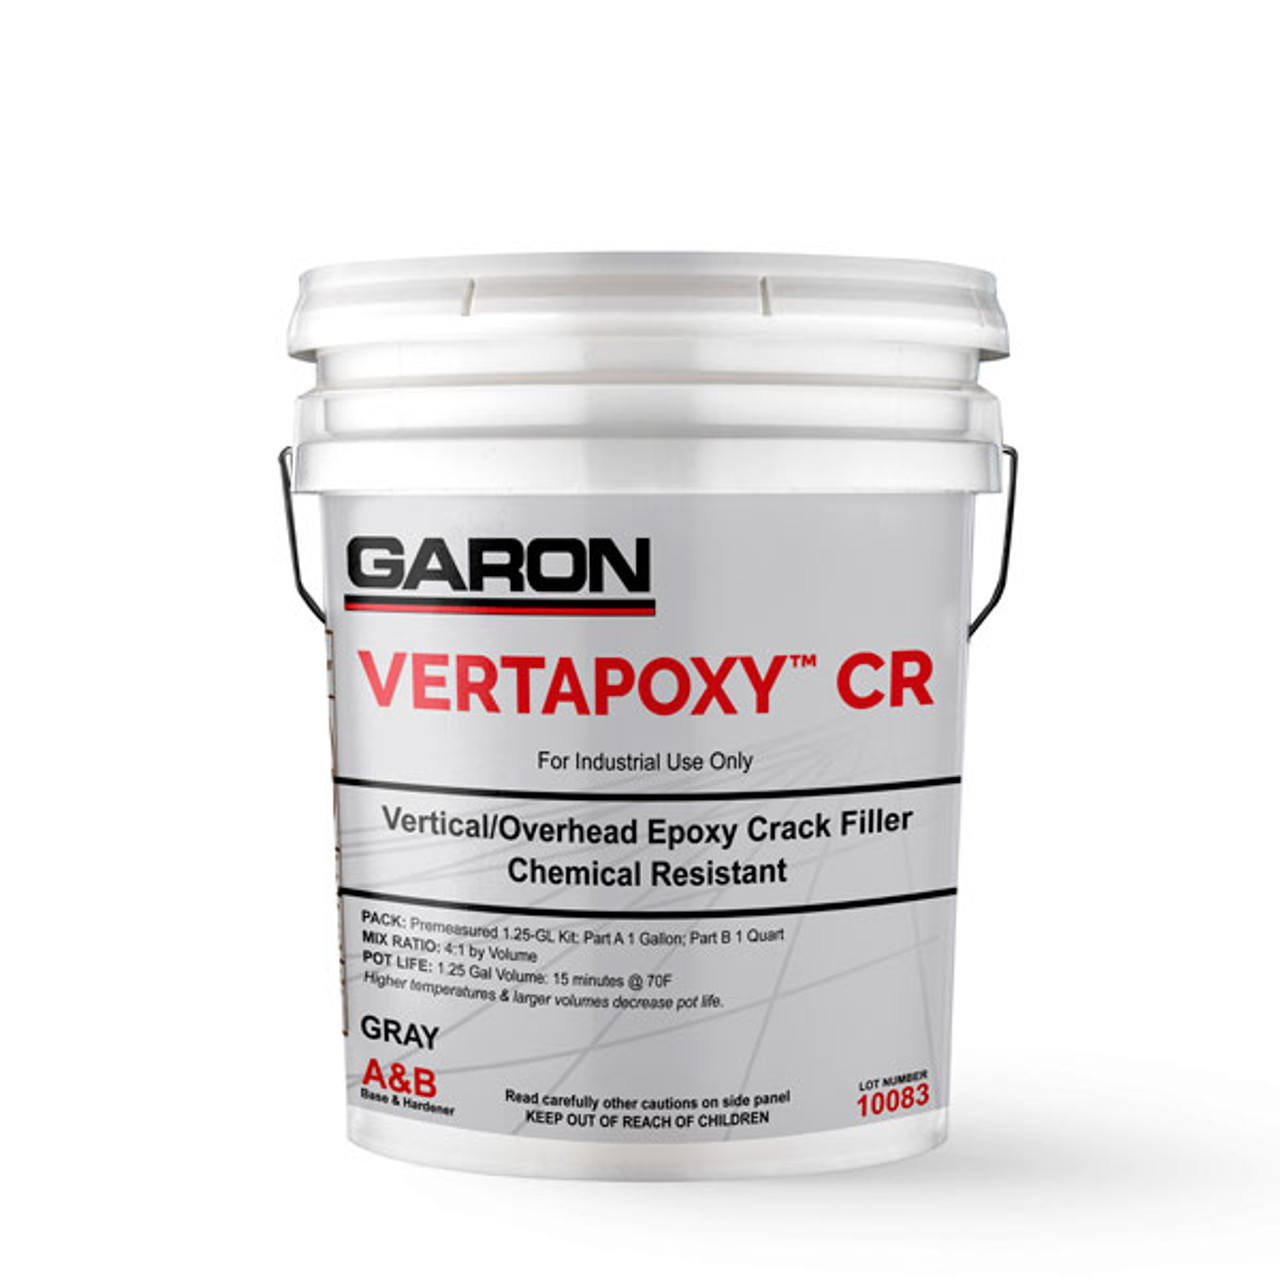 VERTAPOXY™ CR - Garon Products Inc.